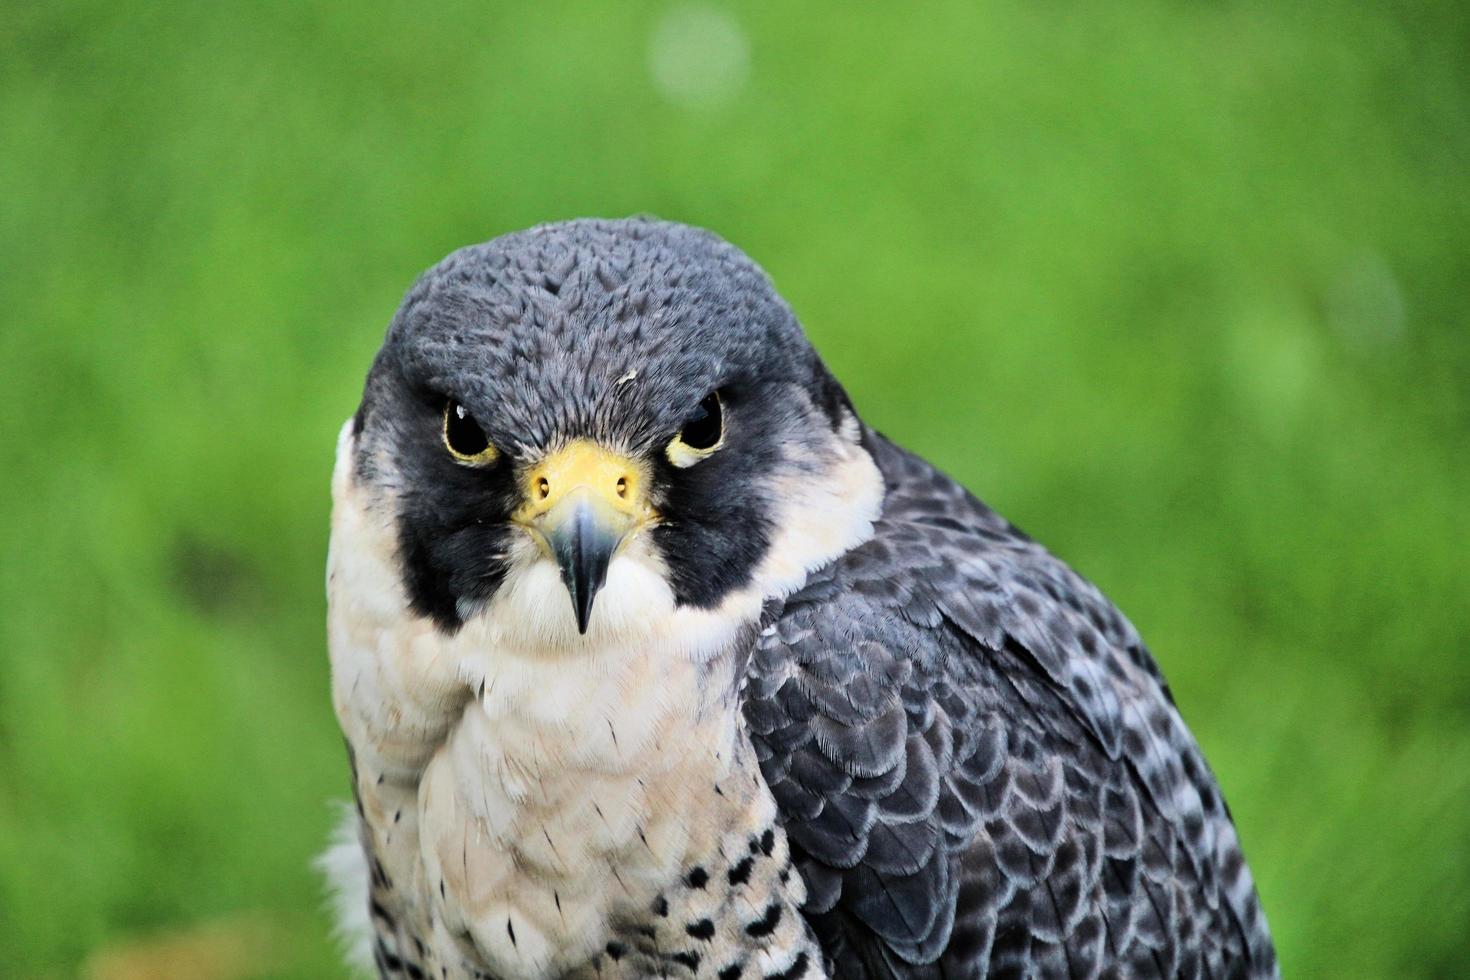 A close up of a Pergrine Falcon photo